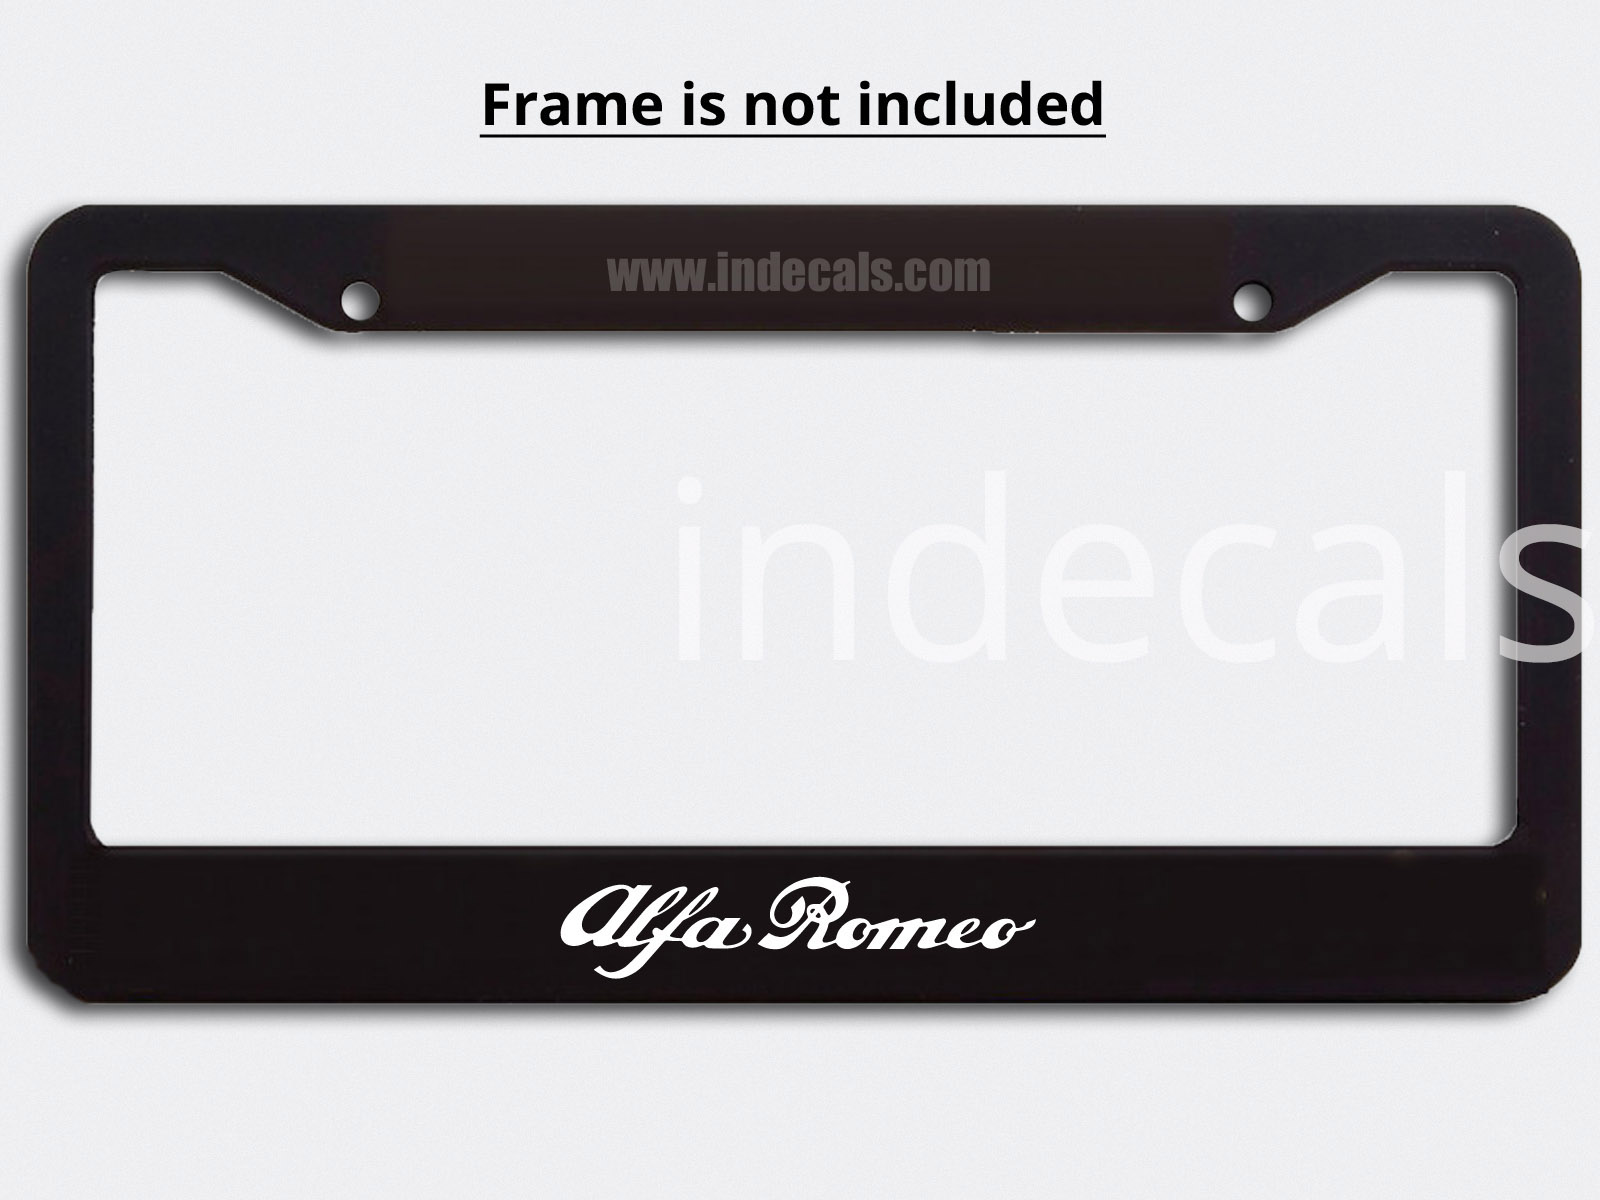 3 x Alfa Romeo Stickers for Plate Frame - White